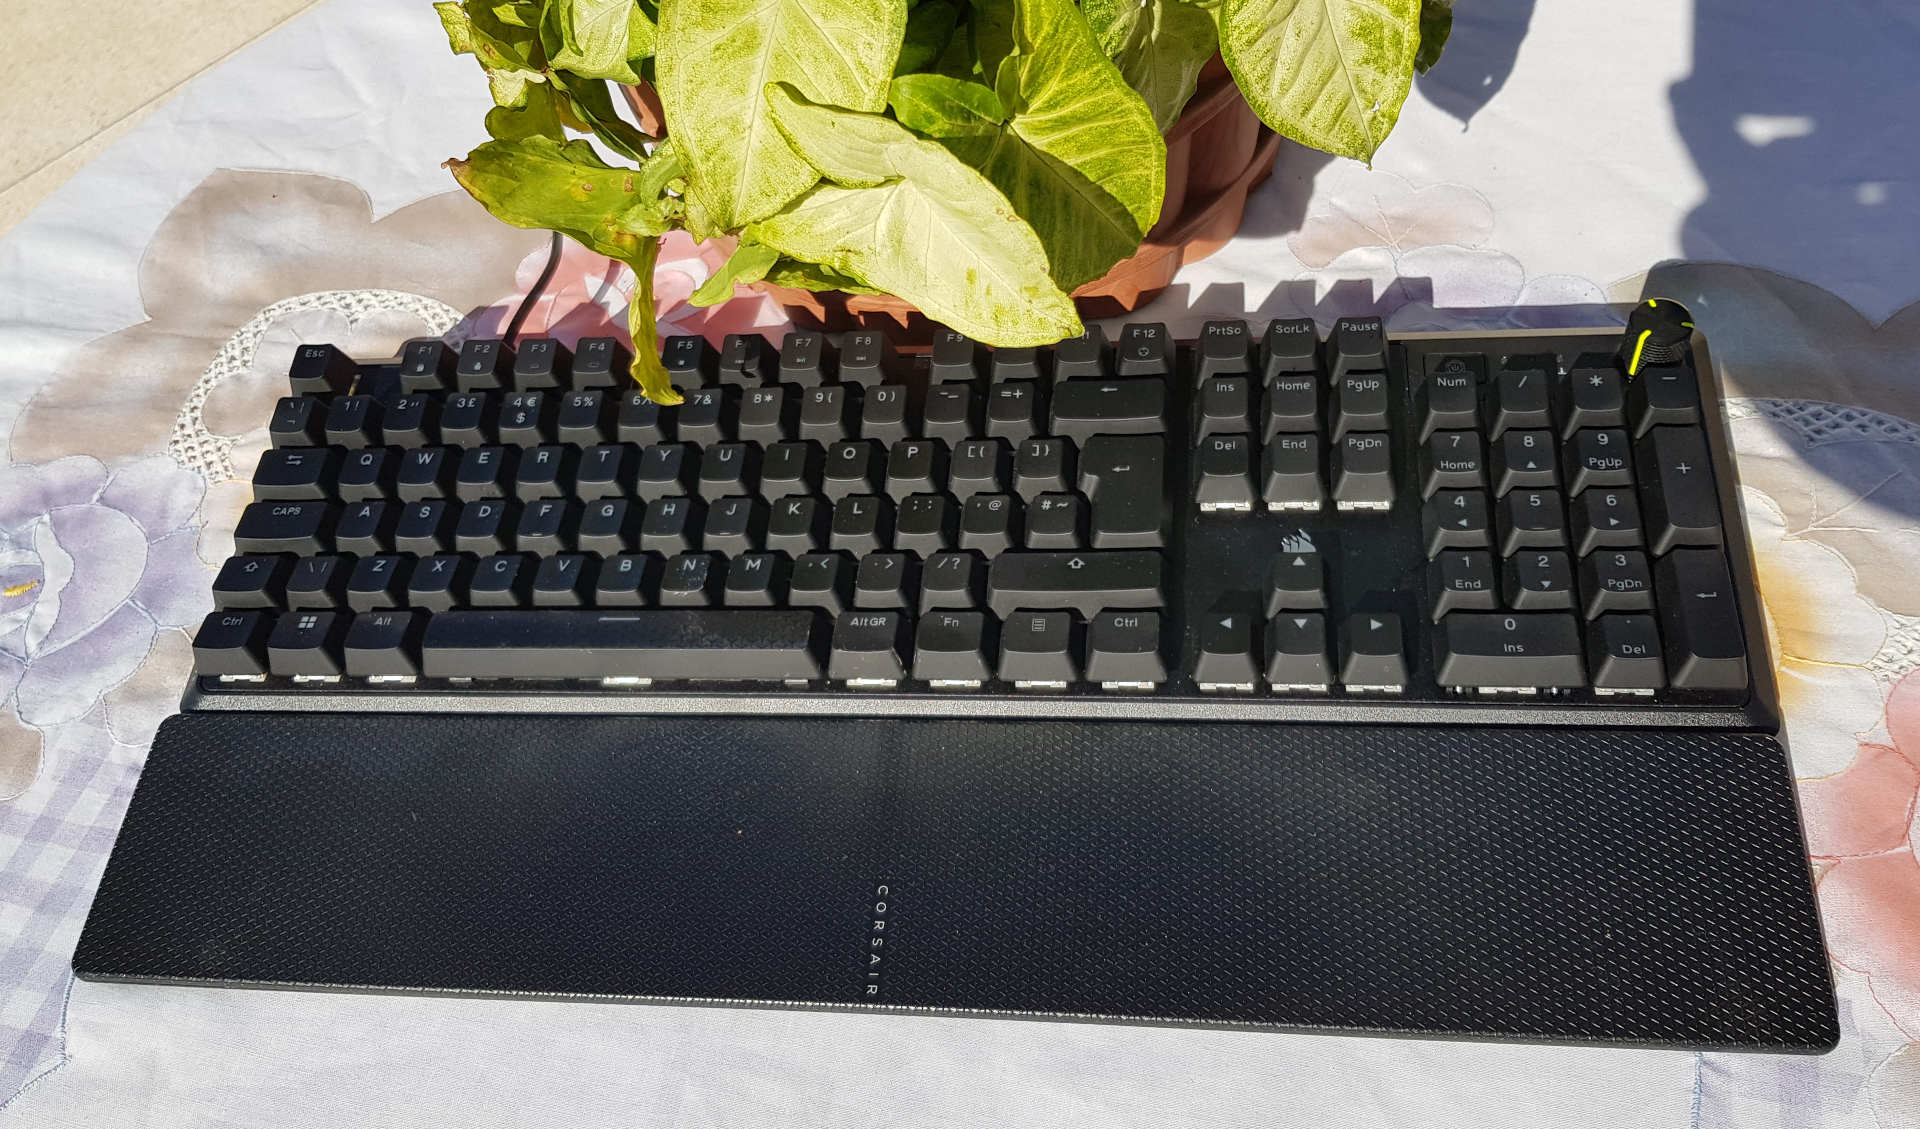 Corsair K70 Core RGB mechanical keyboard near a green plant.